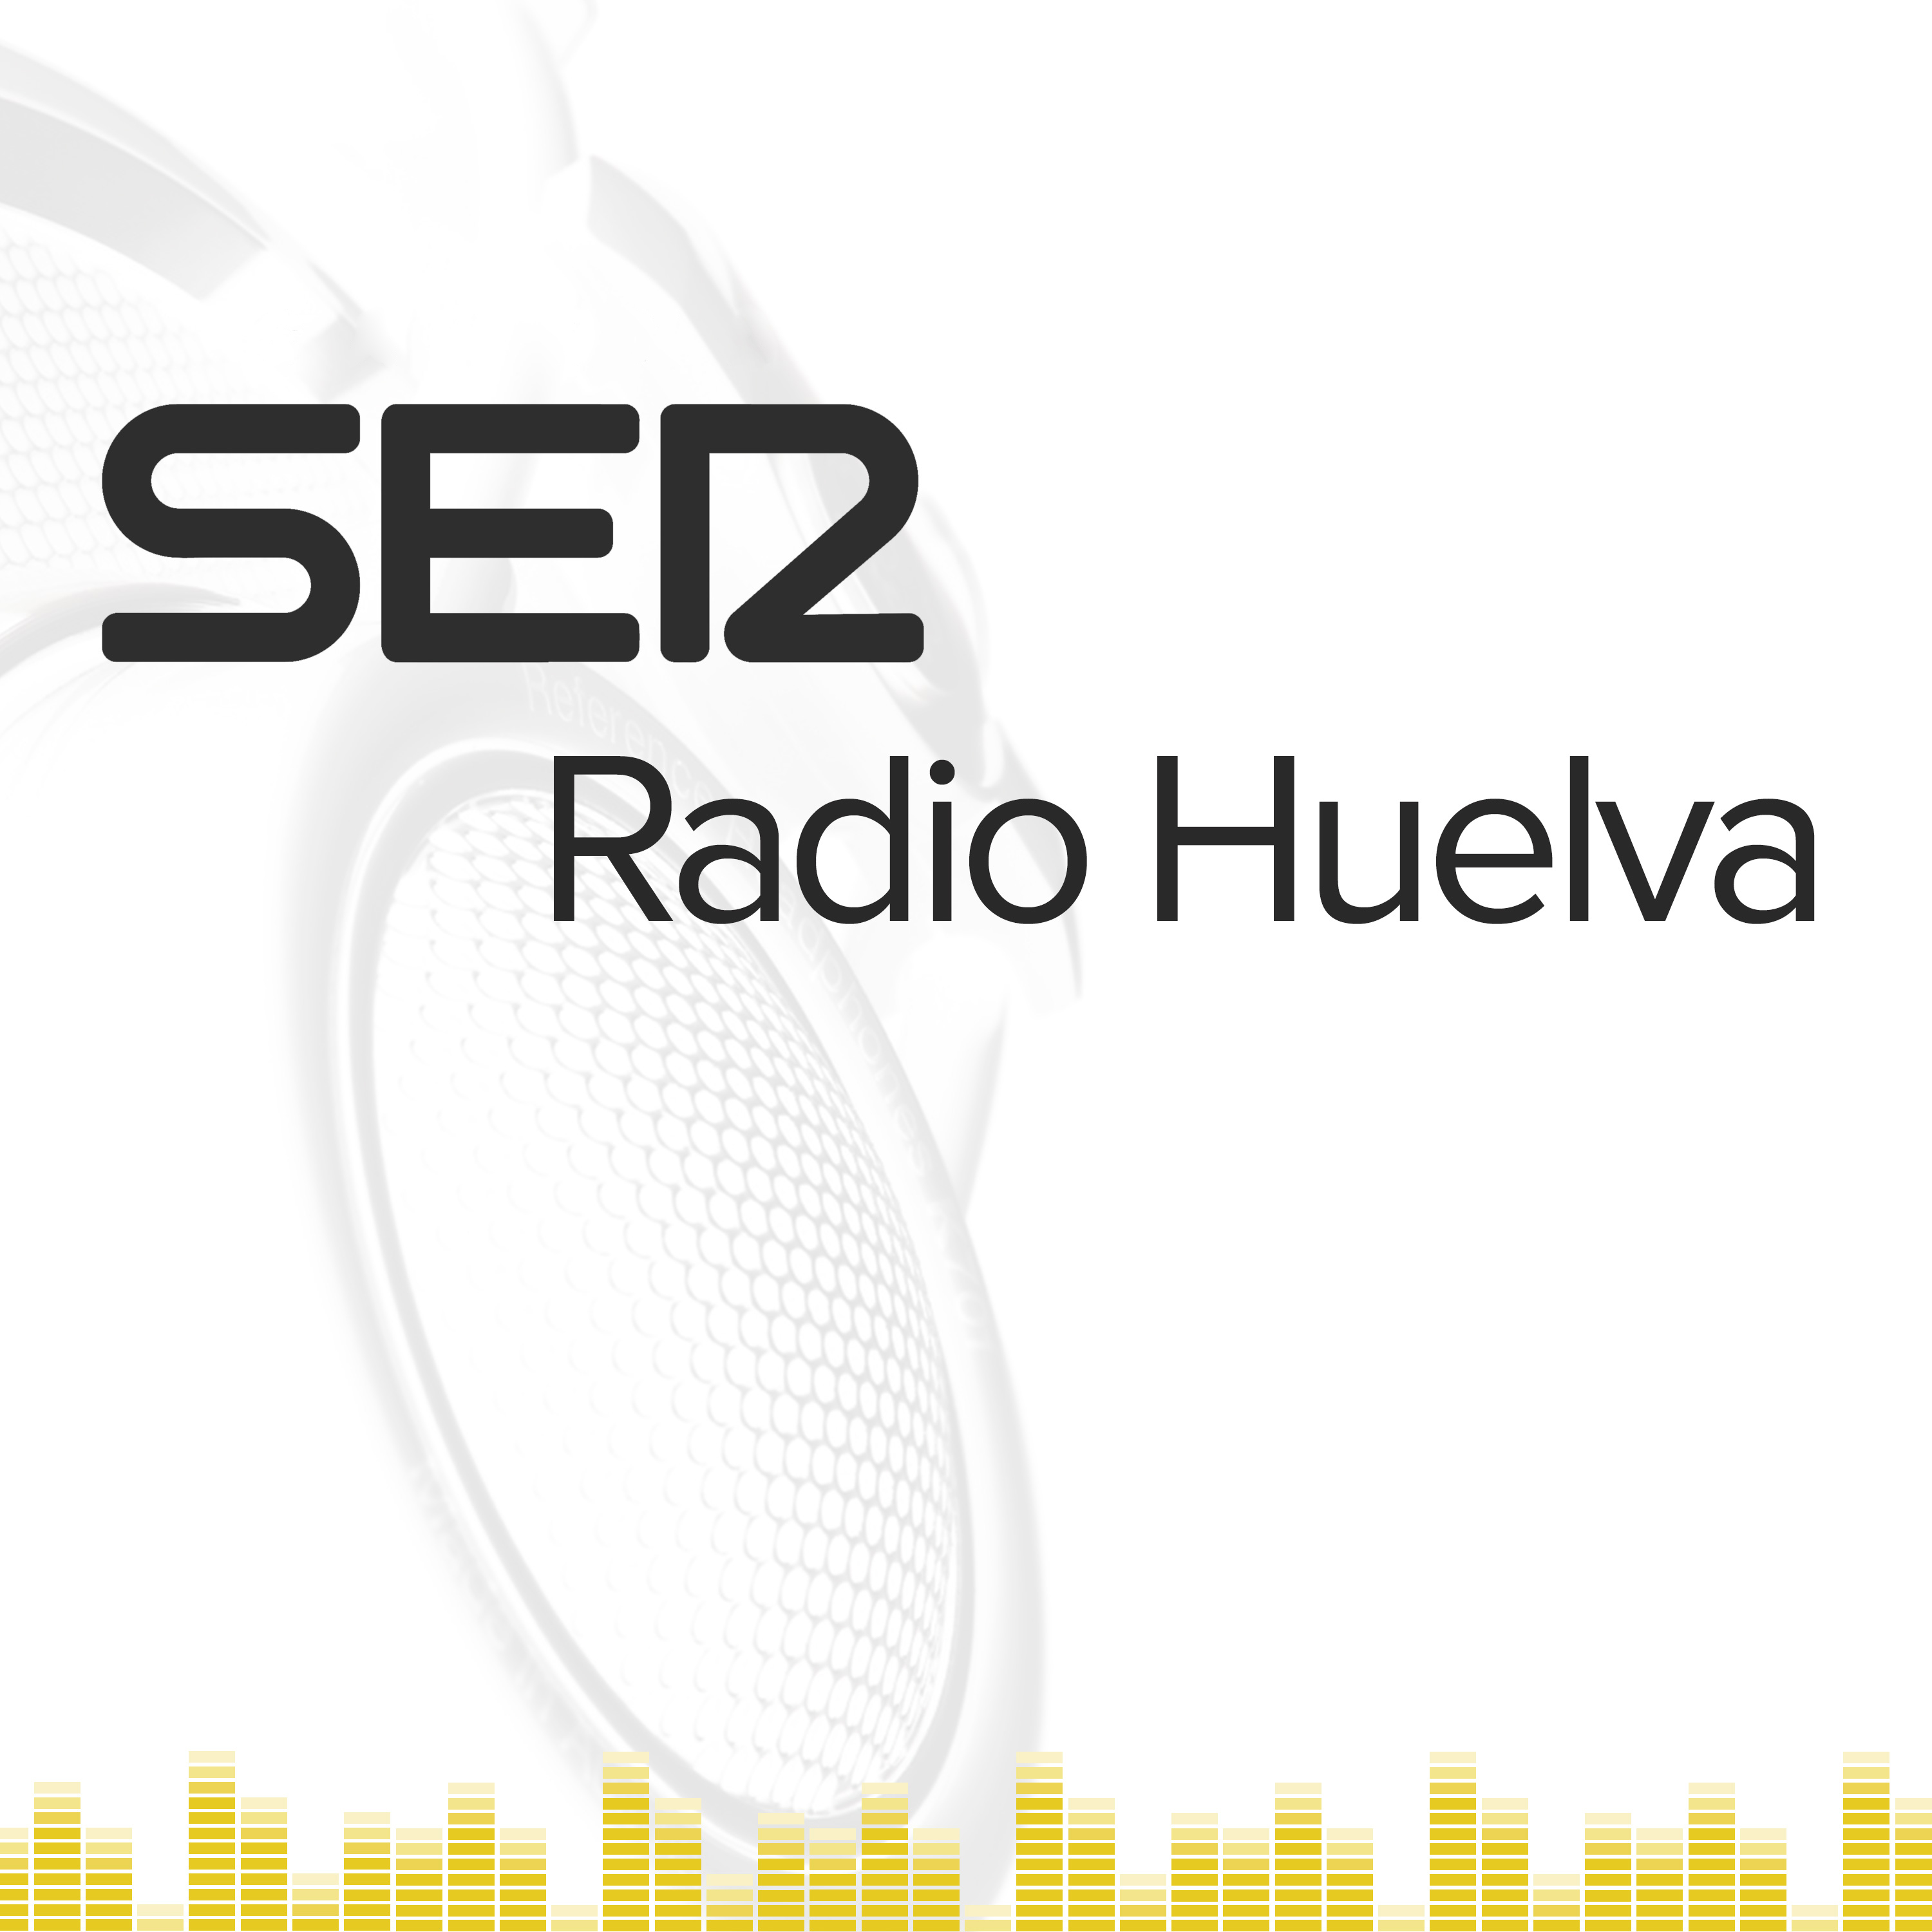 Radio Huelva